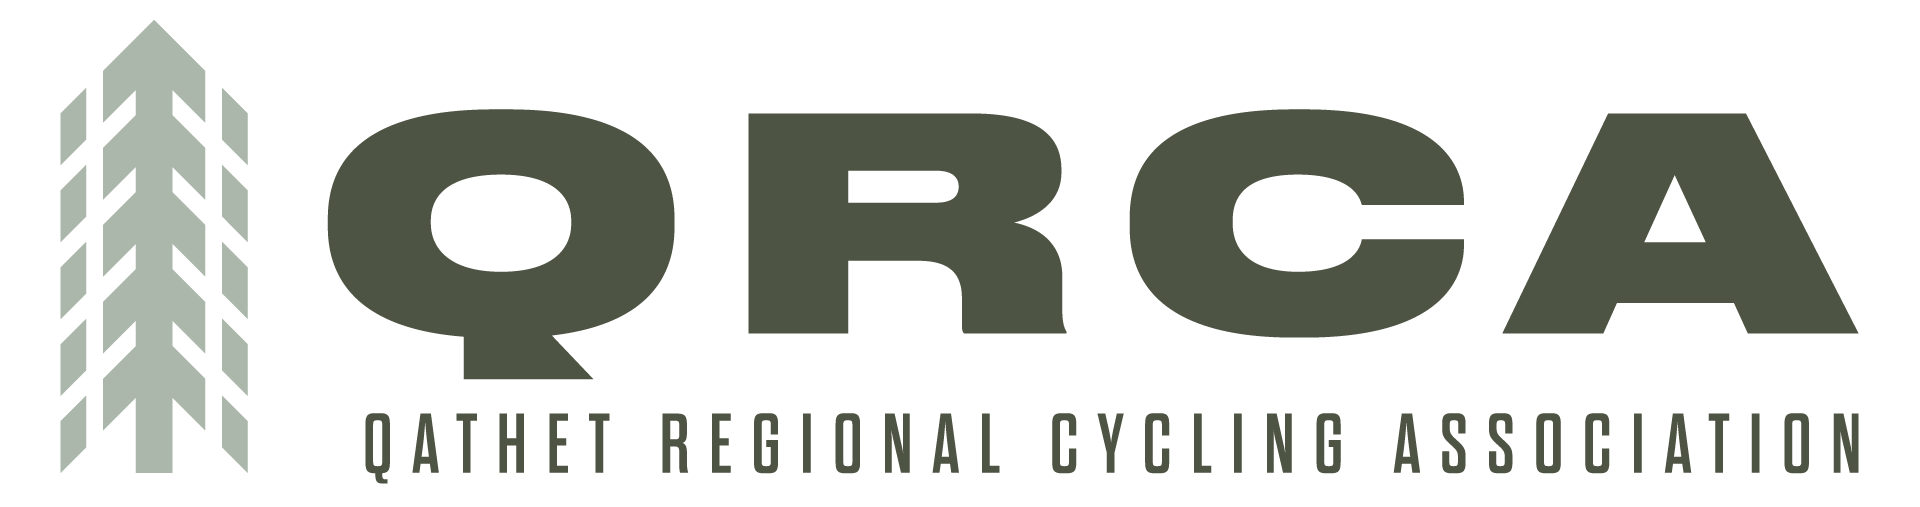 QRCA, qathet regional cycling association